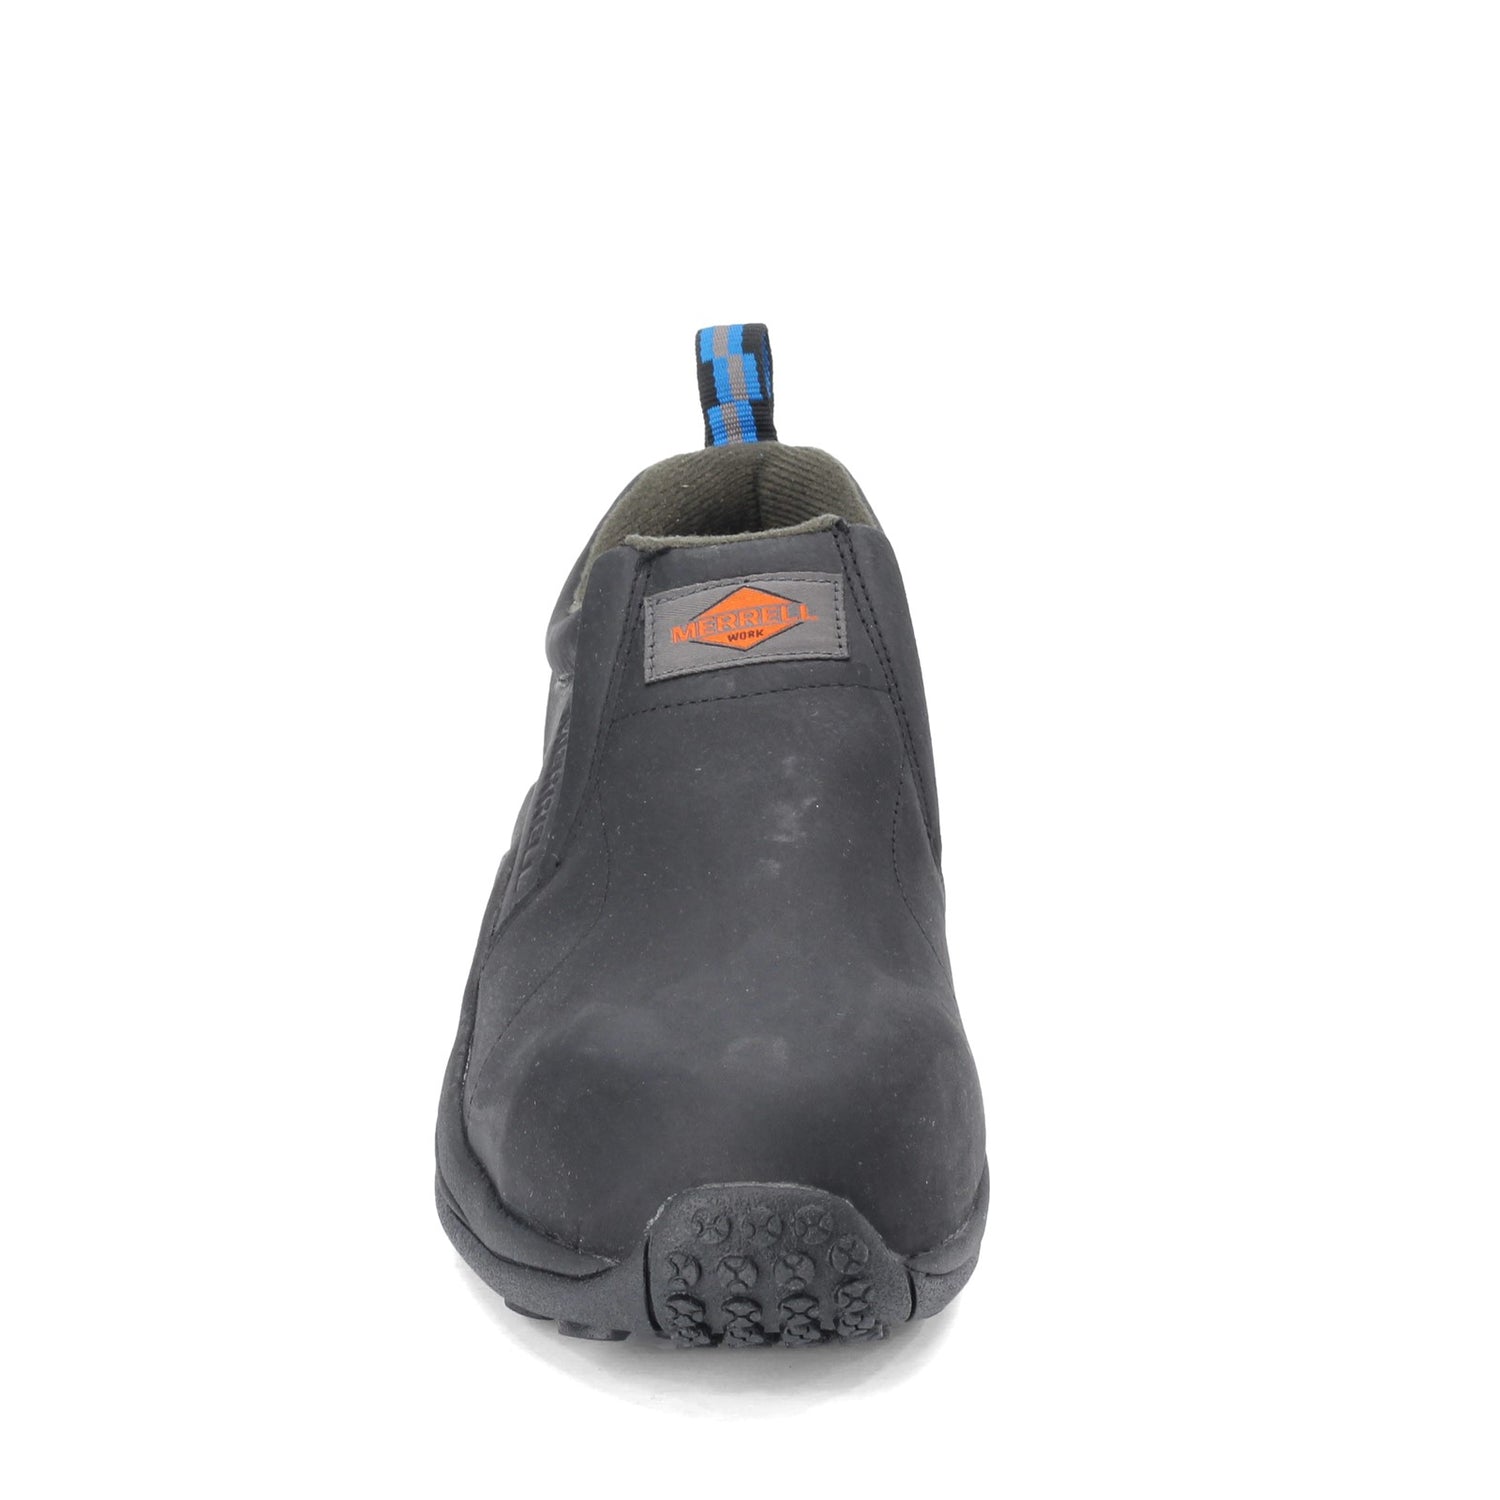 Peltz Shoes  Men's Merrell Jungle Moc Comp Toe Work Shoe BLACK J099317